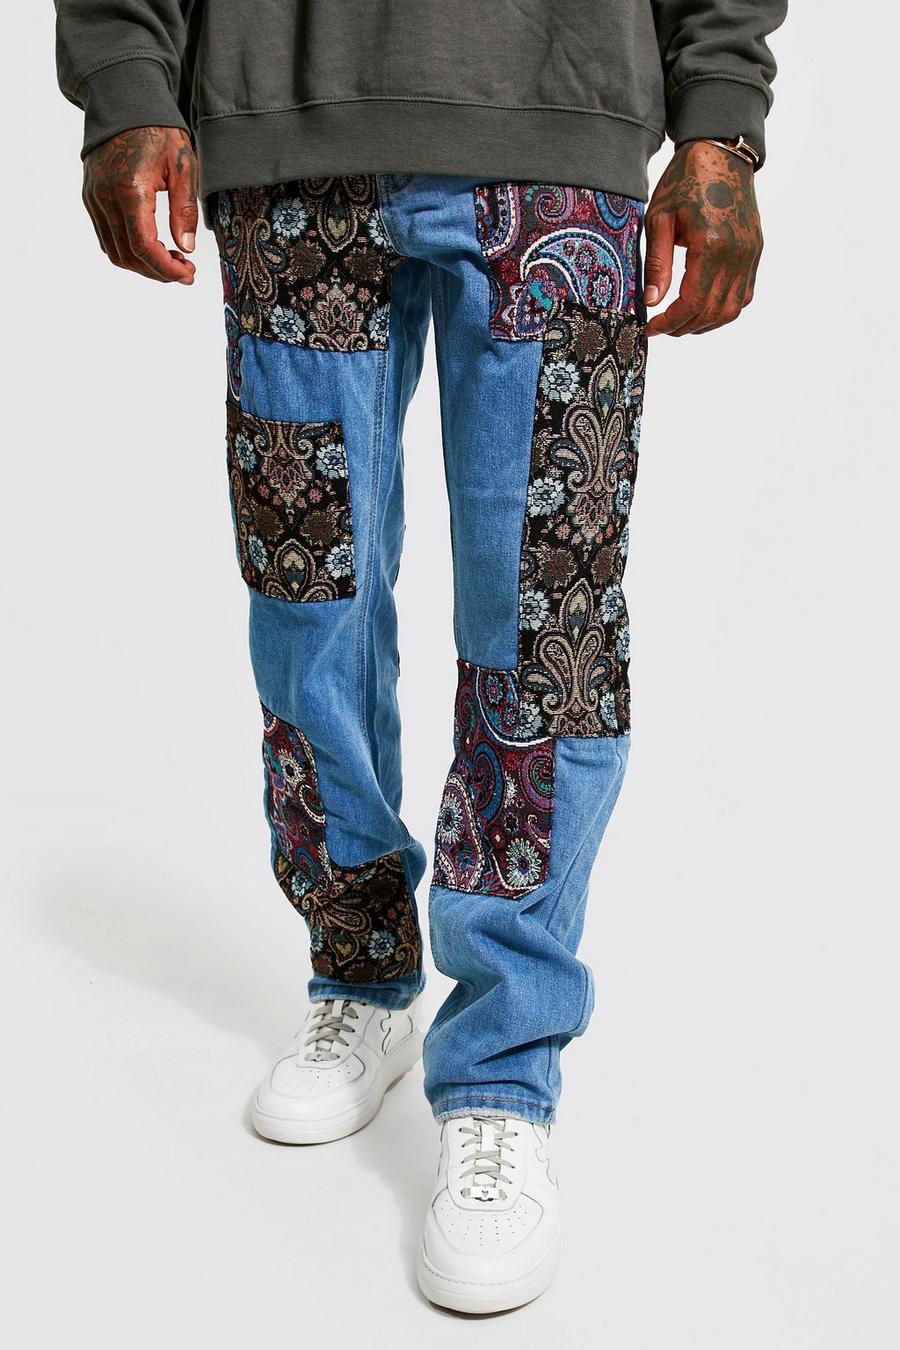 Jeans rilassati stile arazzo effetto patchwork, Light blue